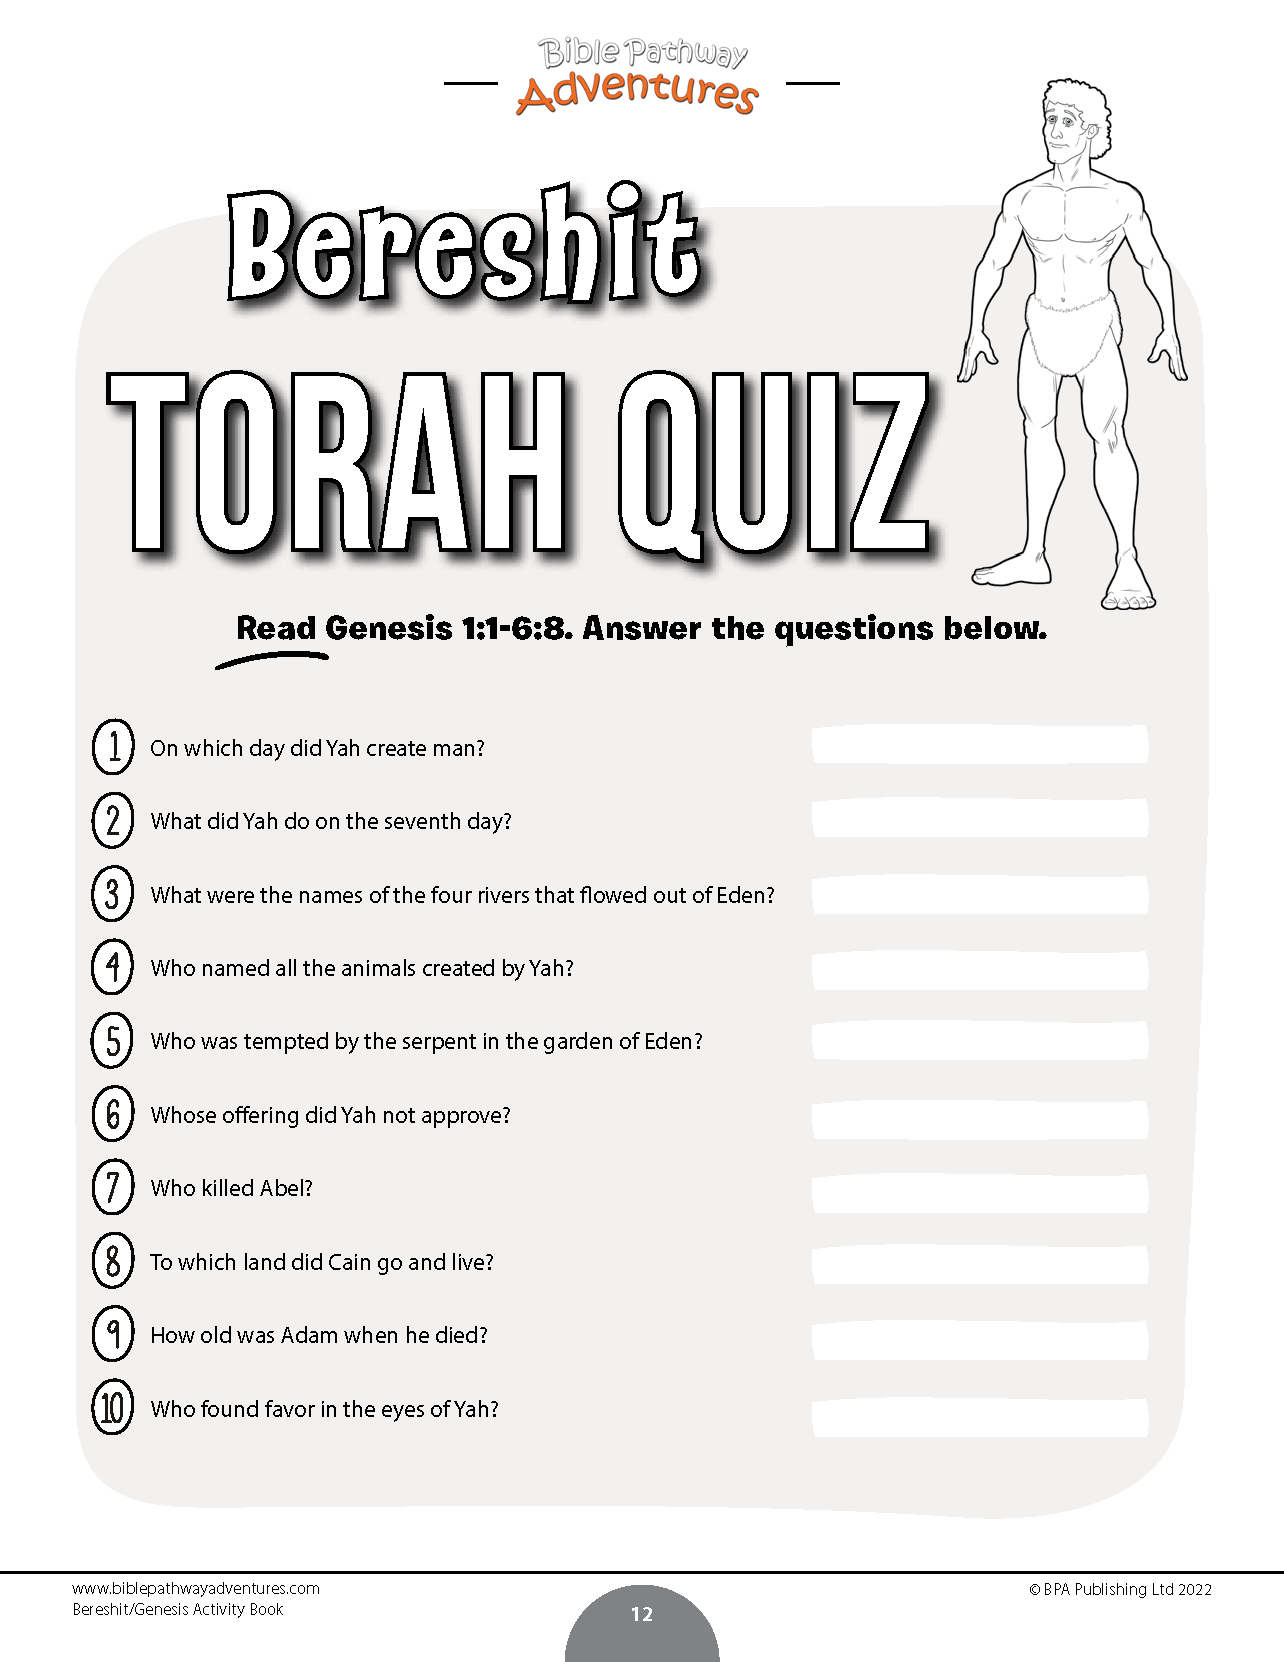 Bereshit / Genesis Torah Portion Activity Book